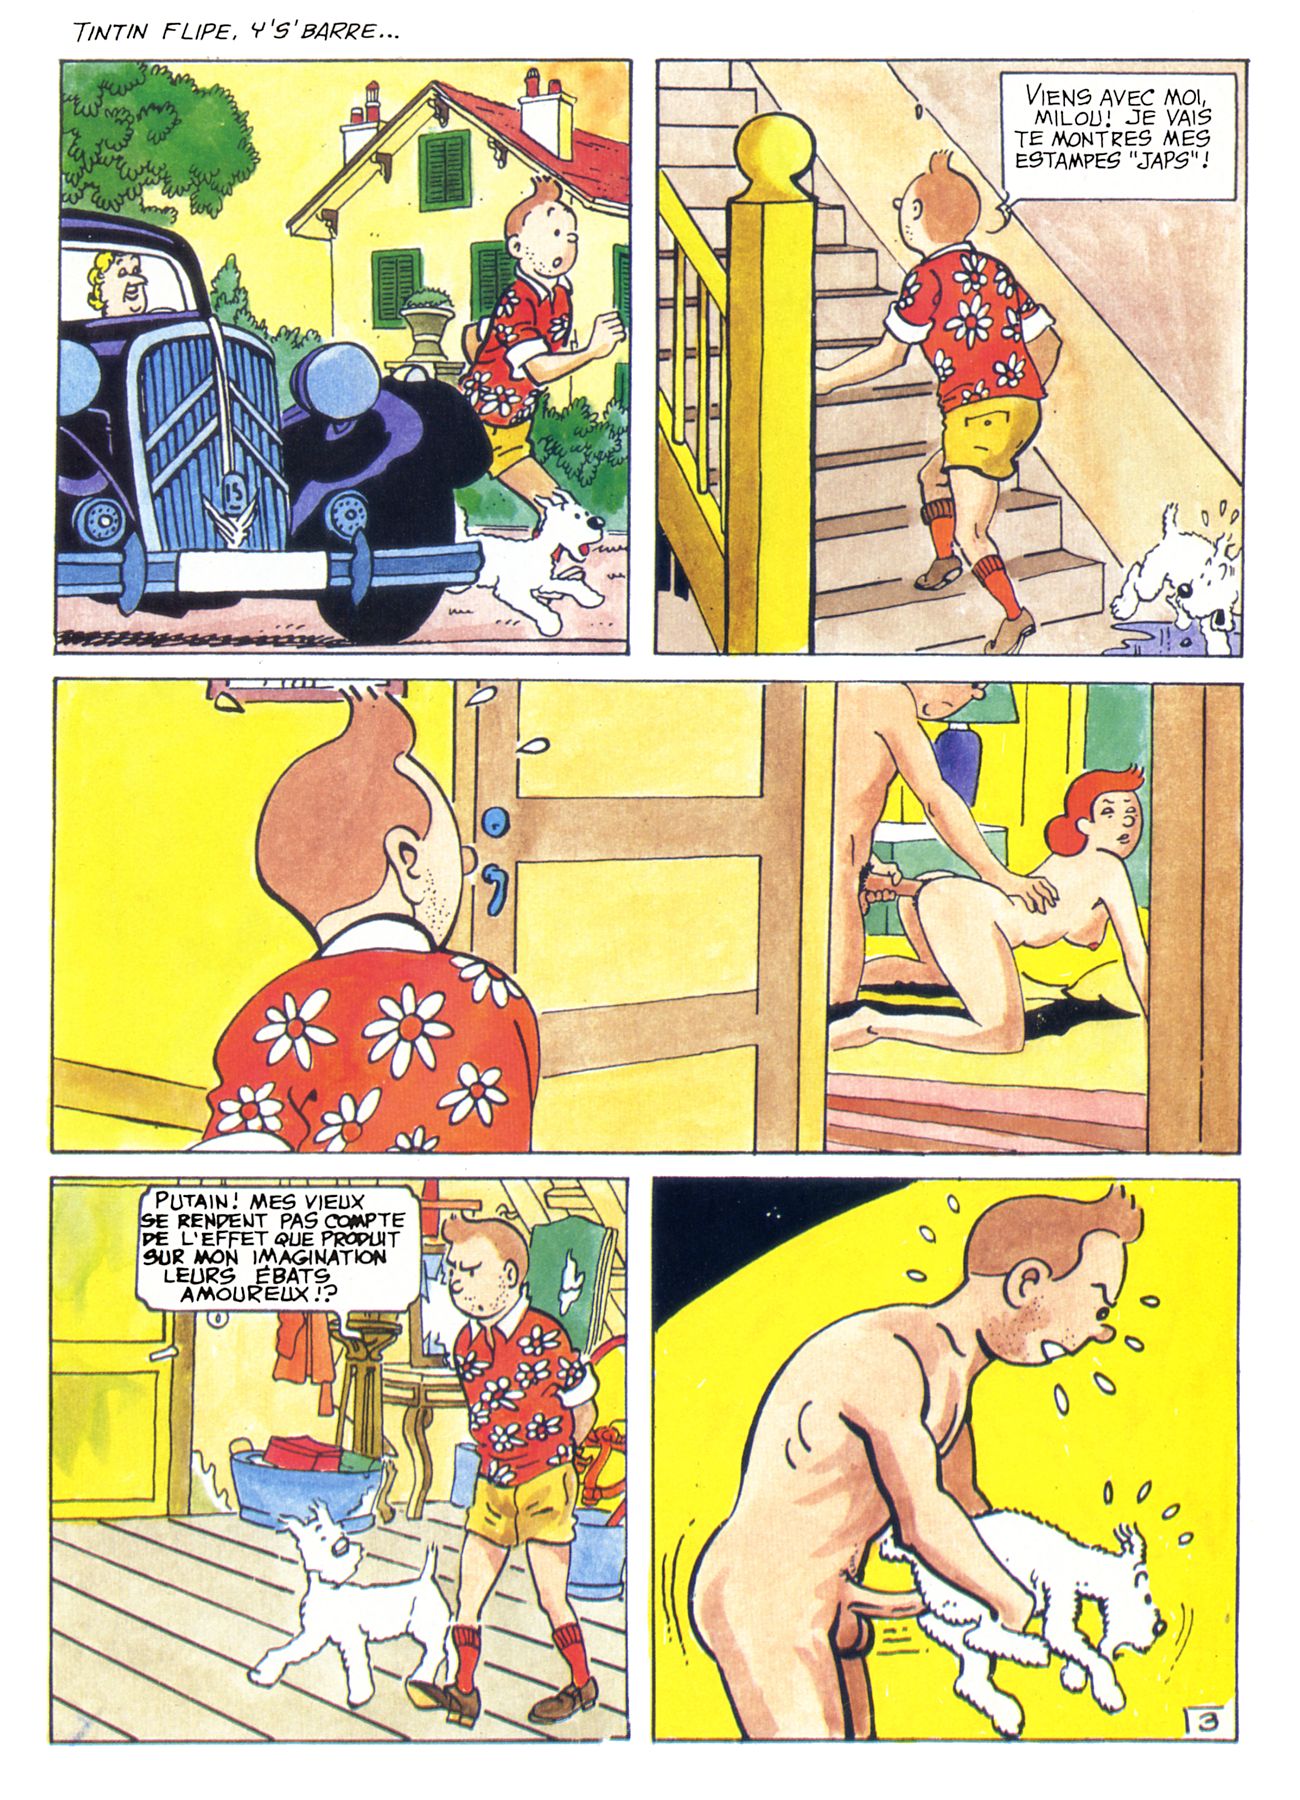 La-Vie-Sexuelle-De-Tintin-1992-All-64-pages-French-page03--Gotofap.tk--75523773.jpg